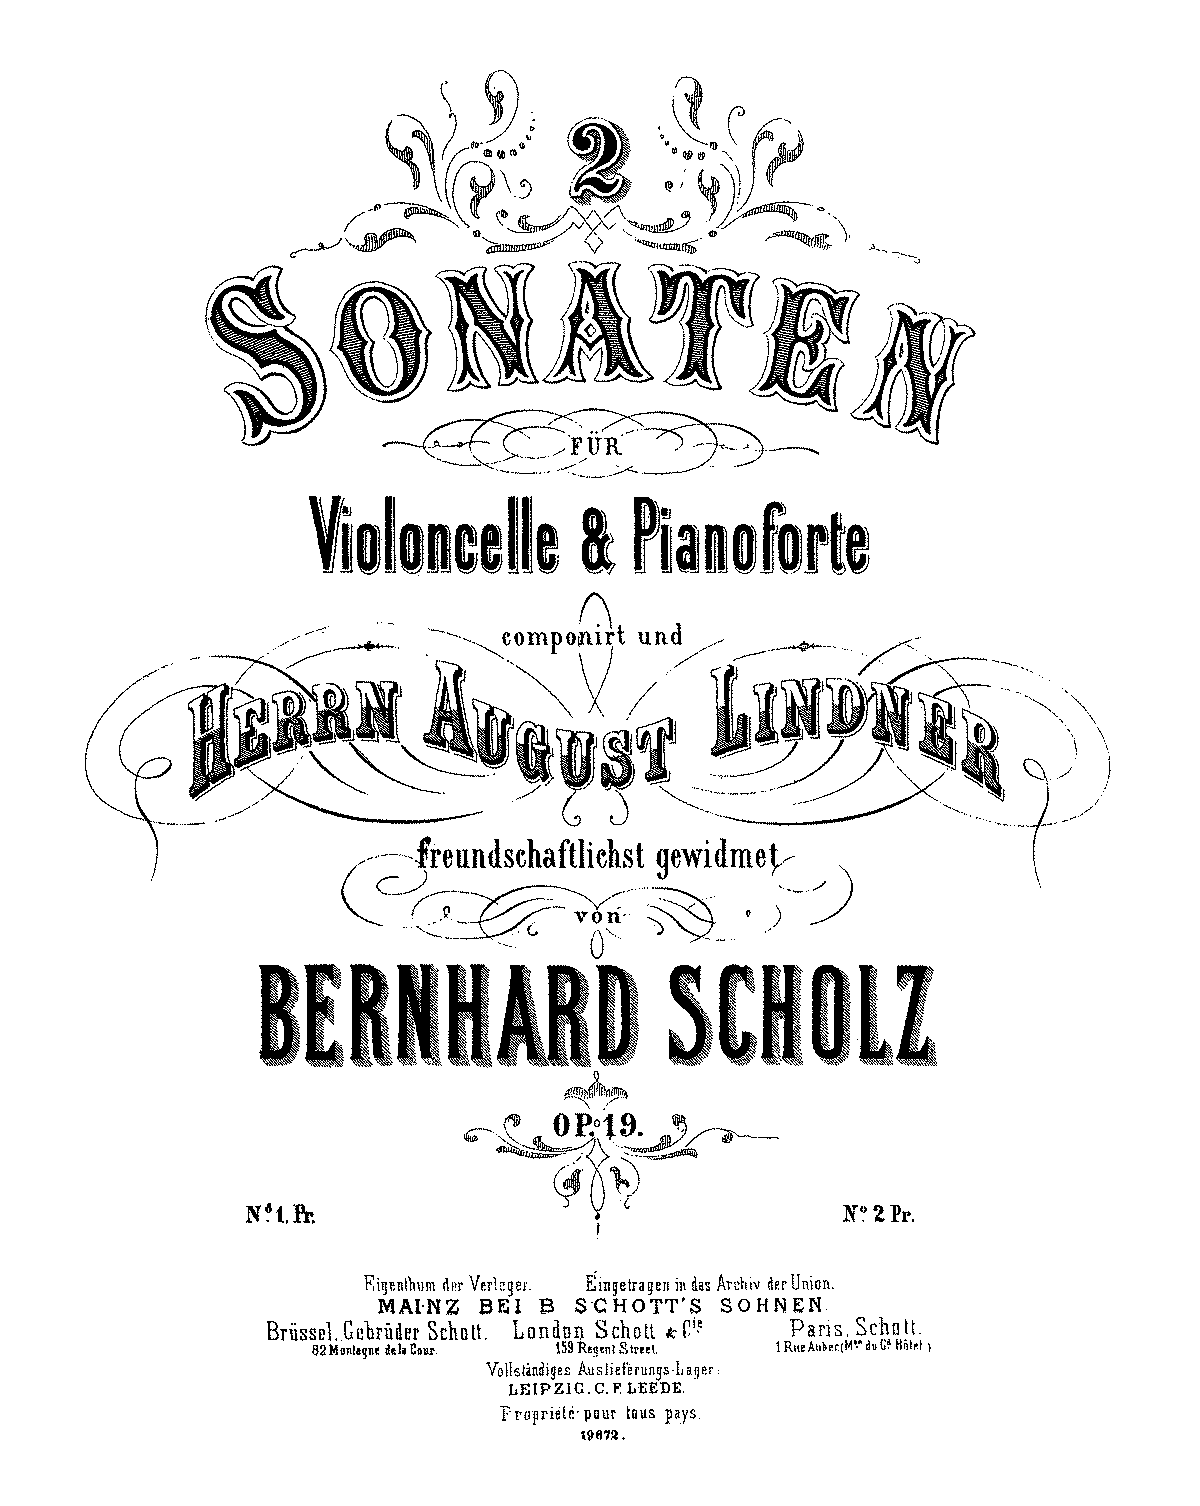 2 Cello Sonatas, Op.19 (Scholz, Bernhard) - IMSLP